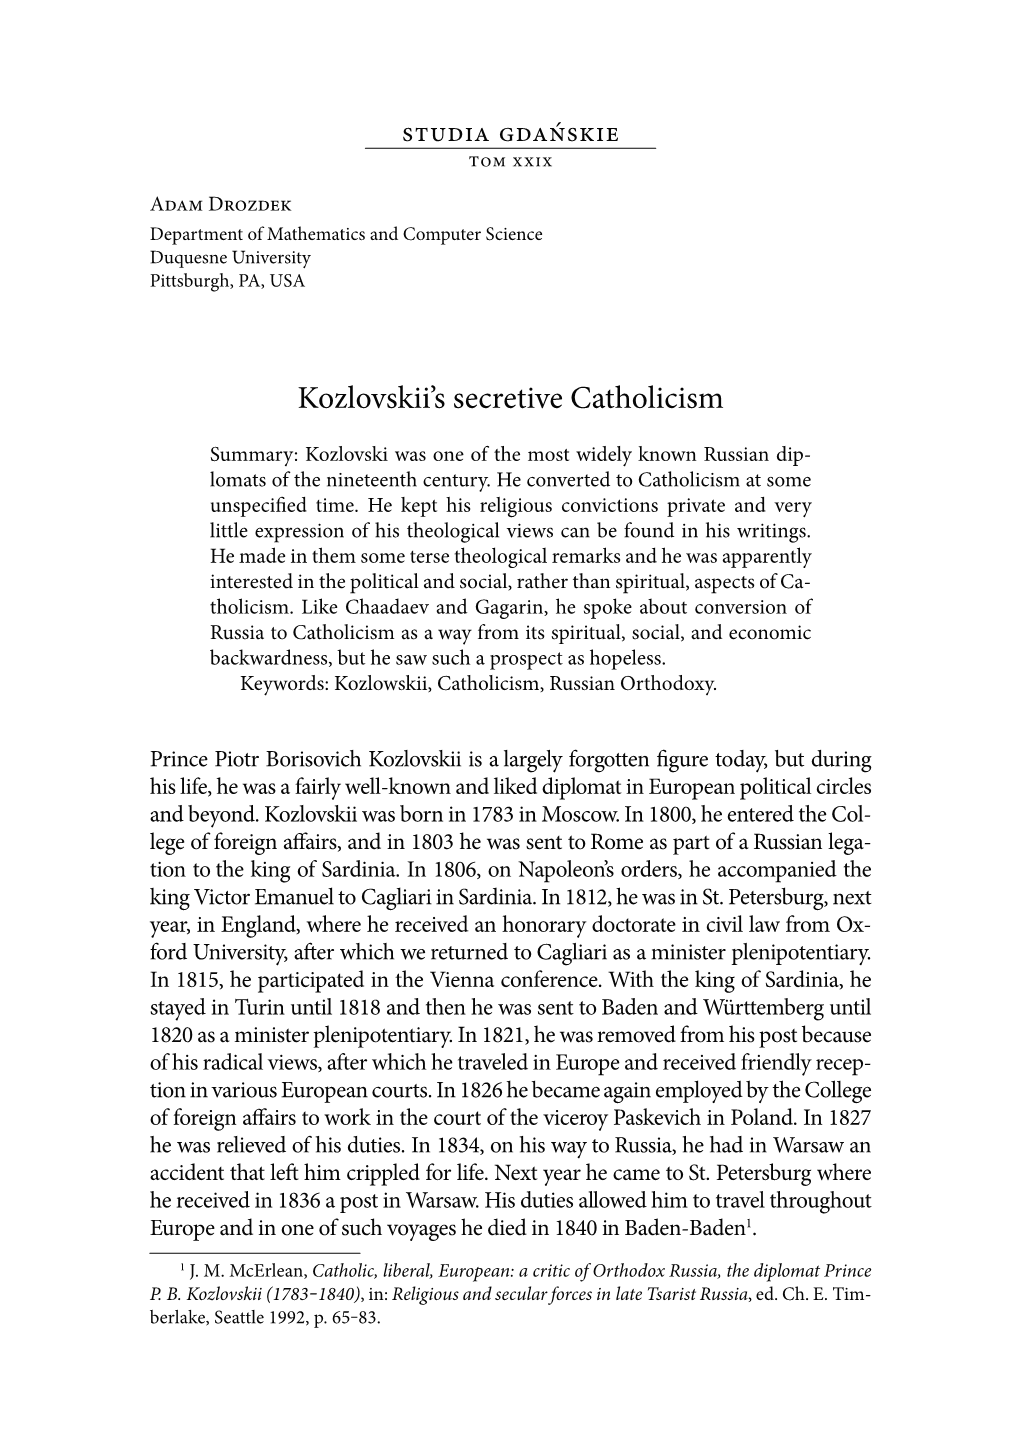 Kozlovskii's Secretive Catholicism